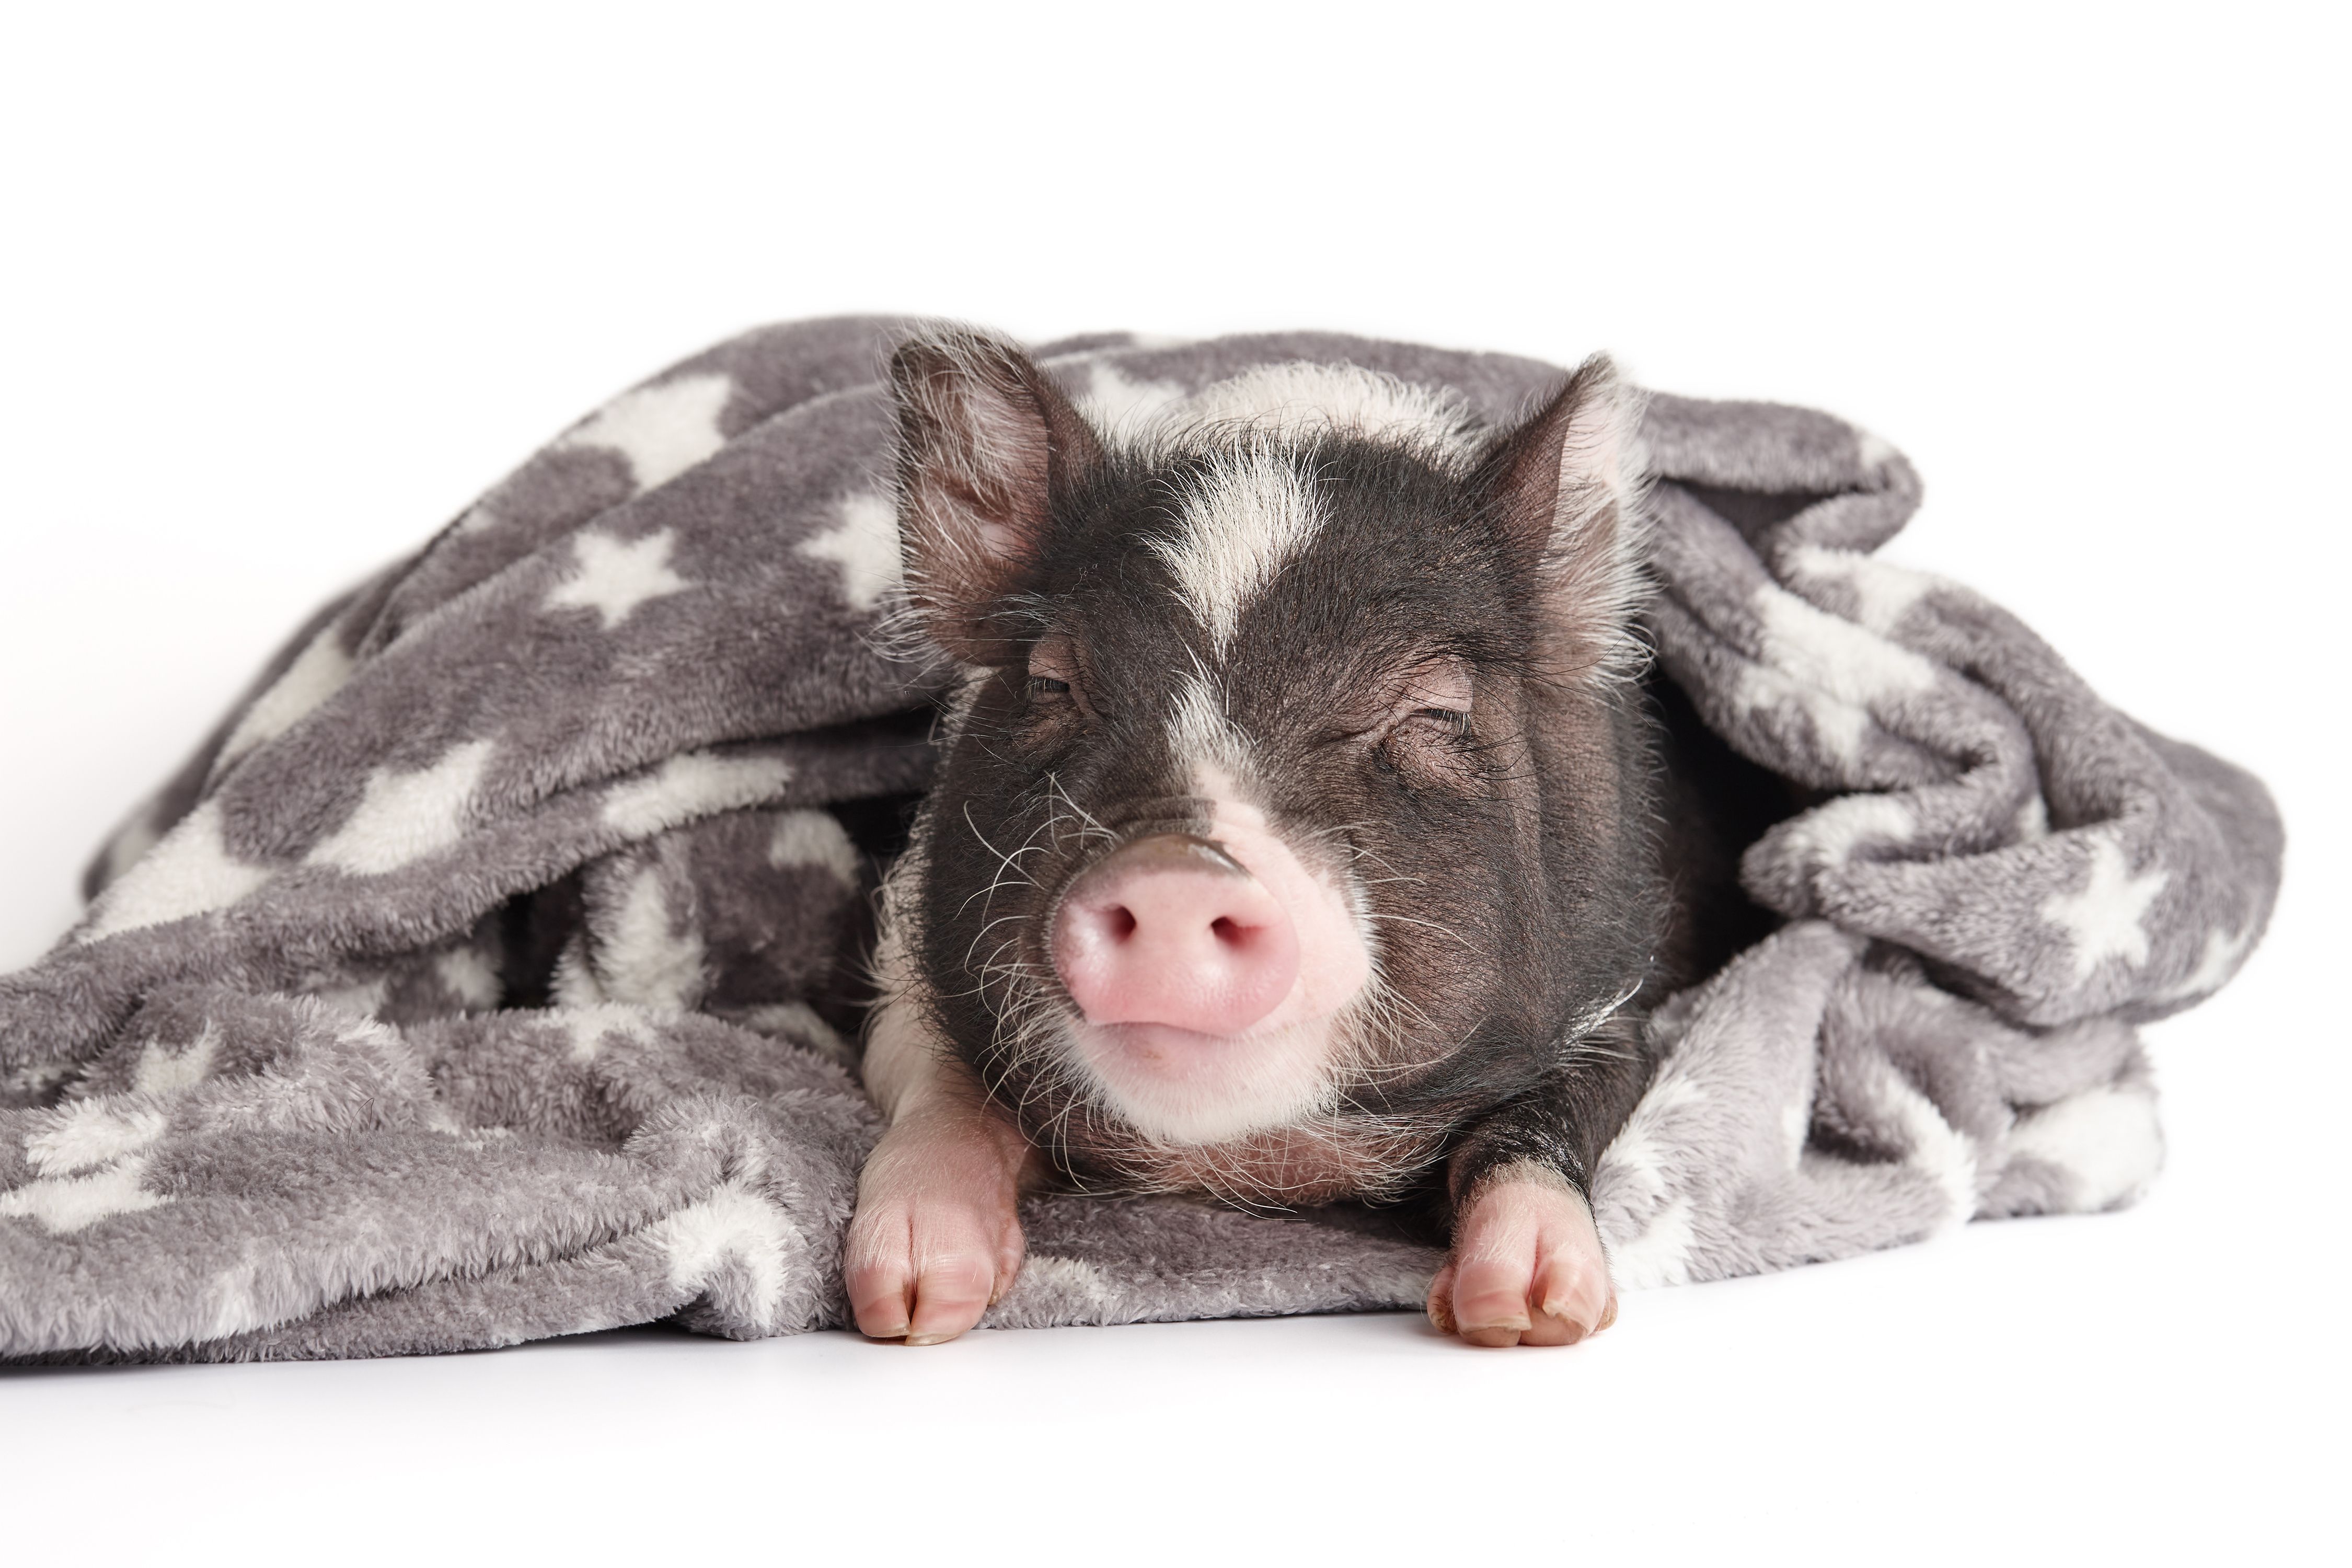 Preventative medicine for miniature pet pigs